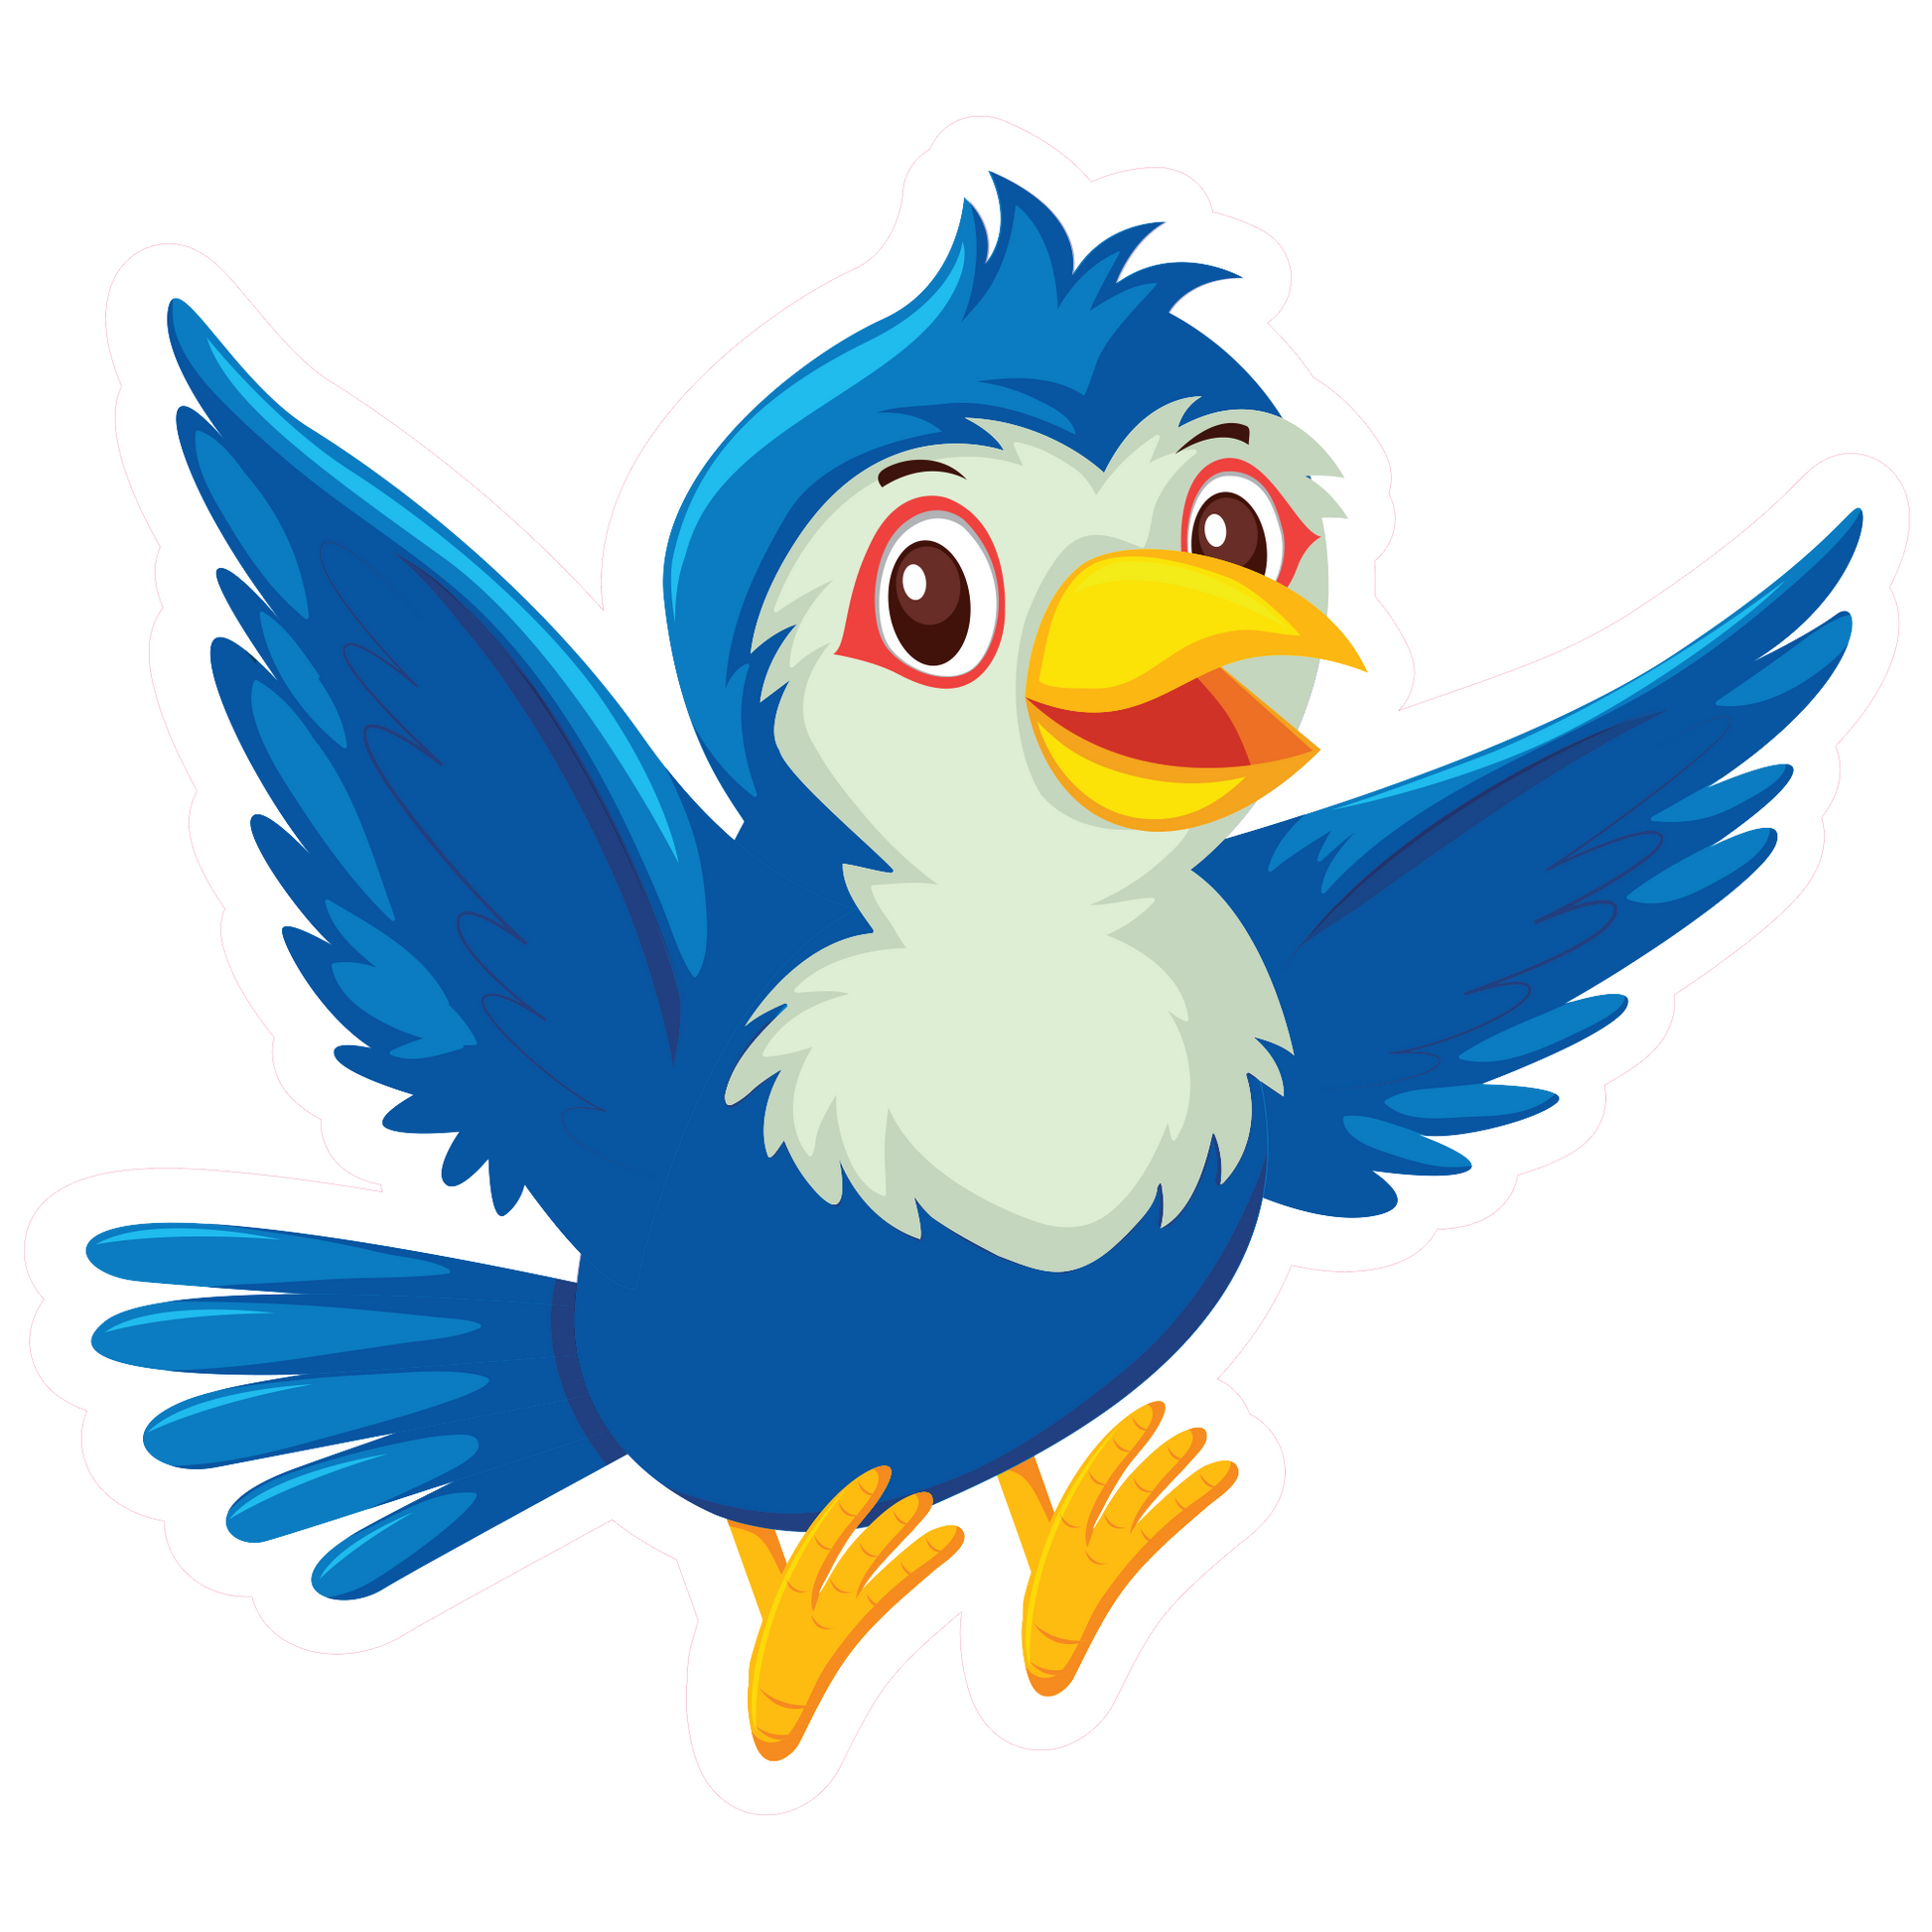 Cute Blue Bird Sticker - Animal Decal